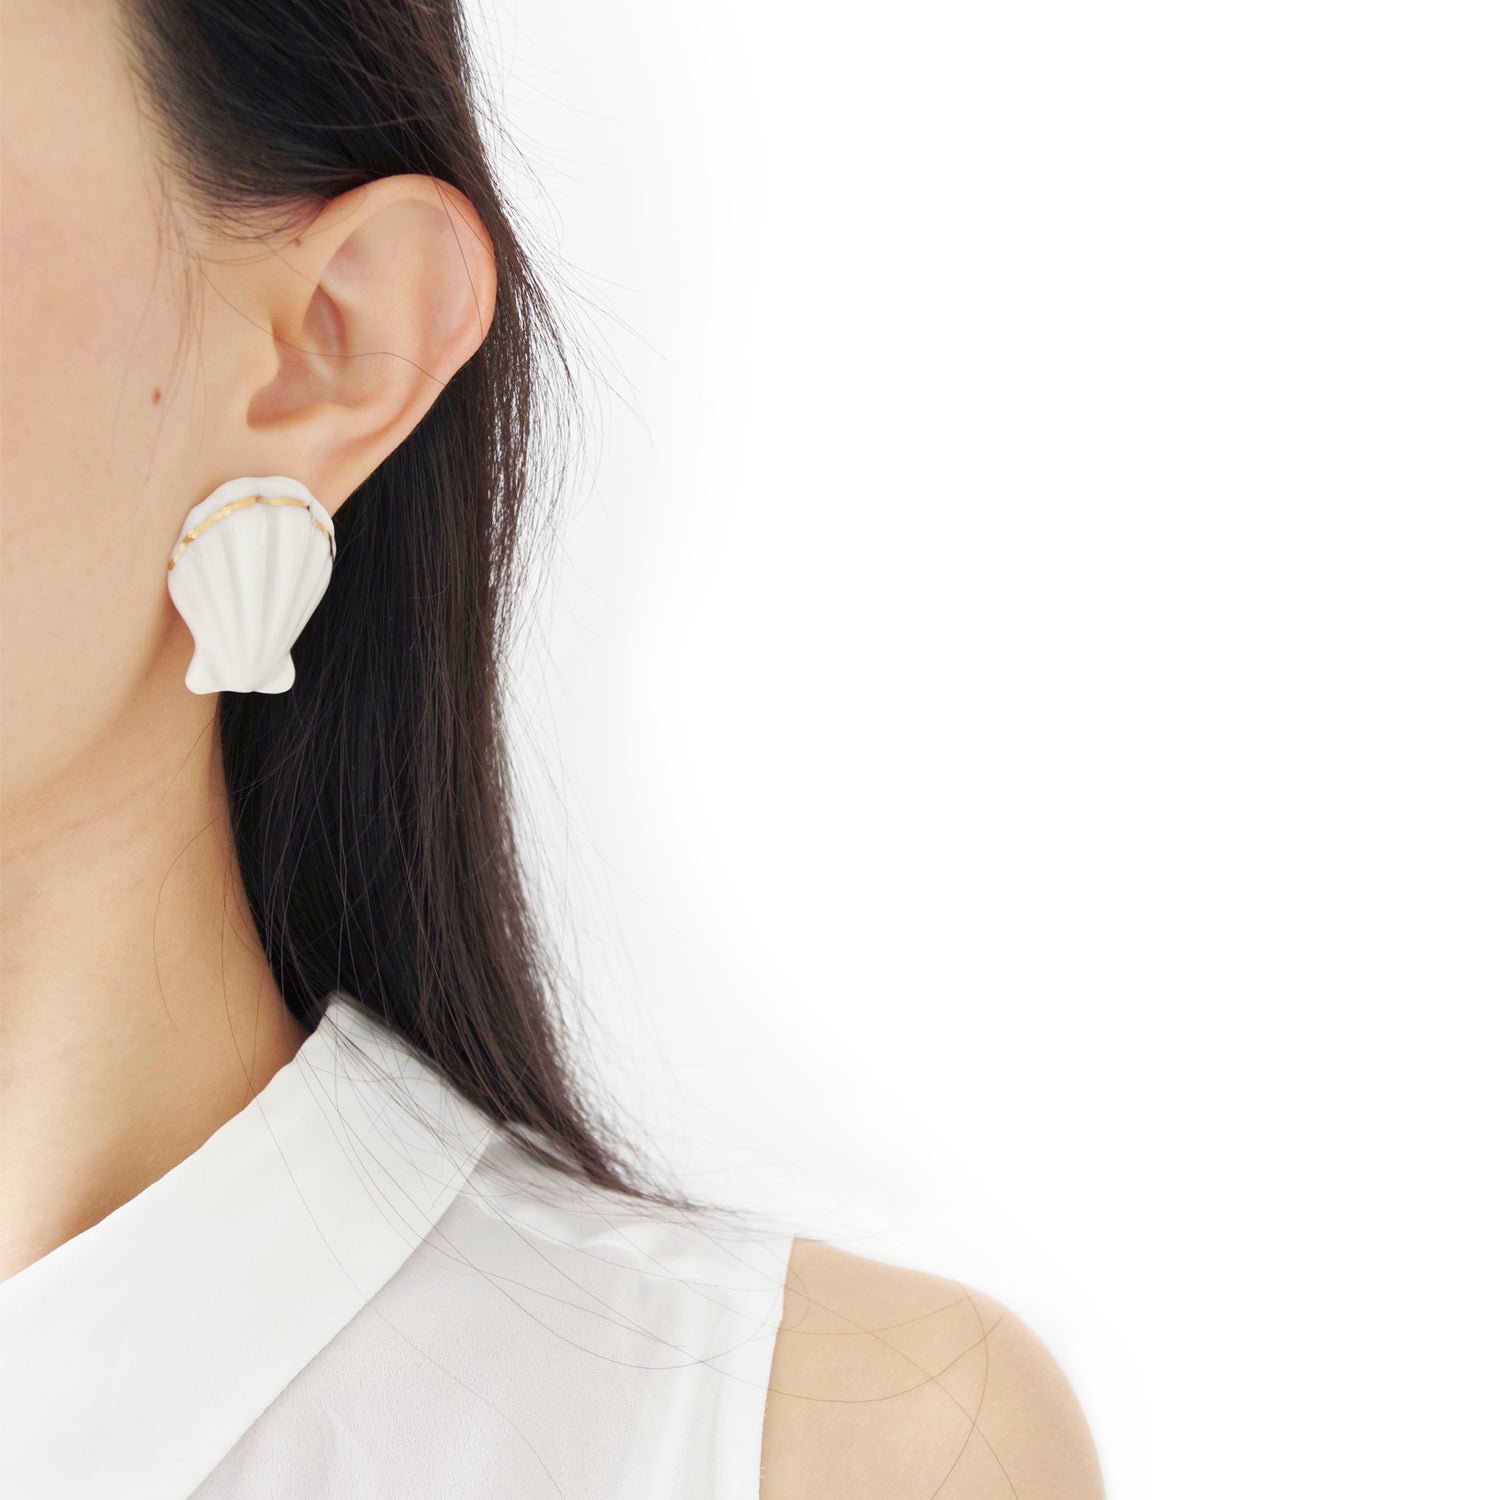 Porcelain Clam Shell Clip-On Earrings